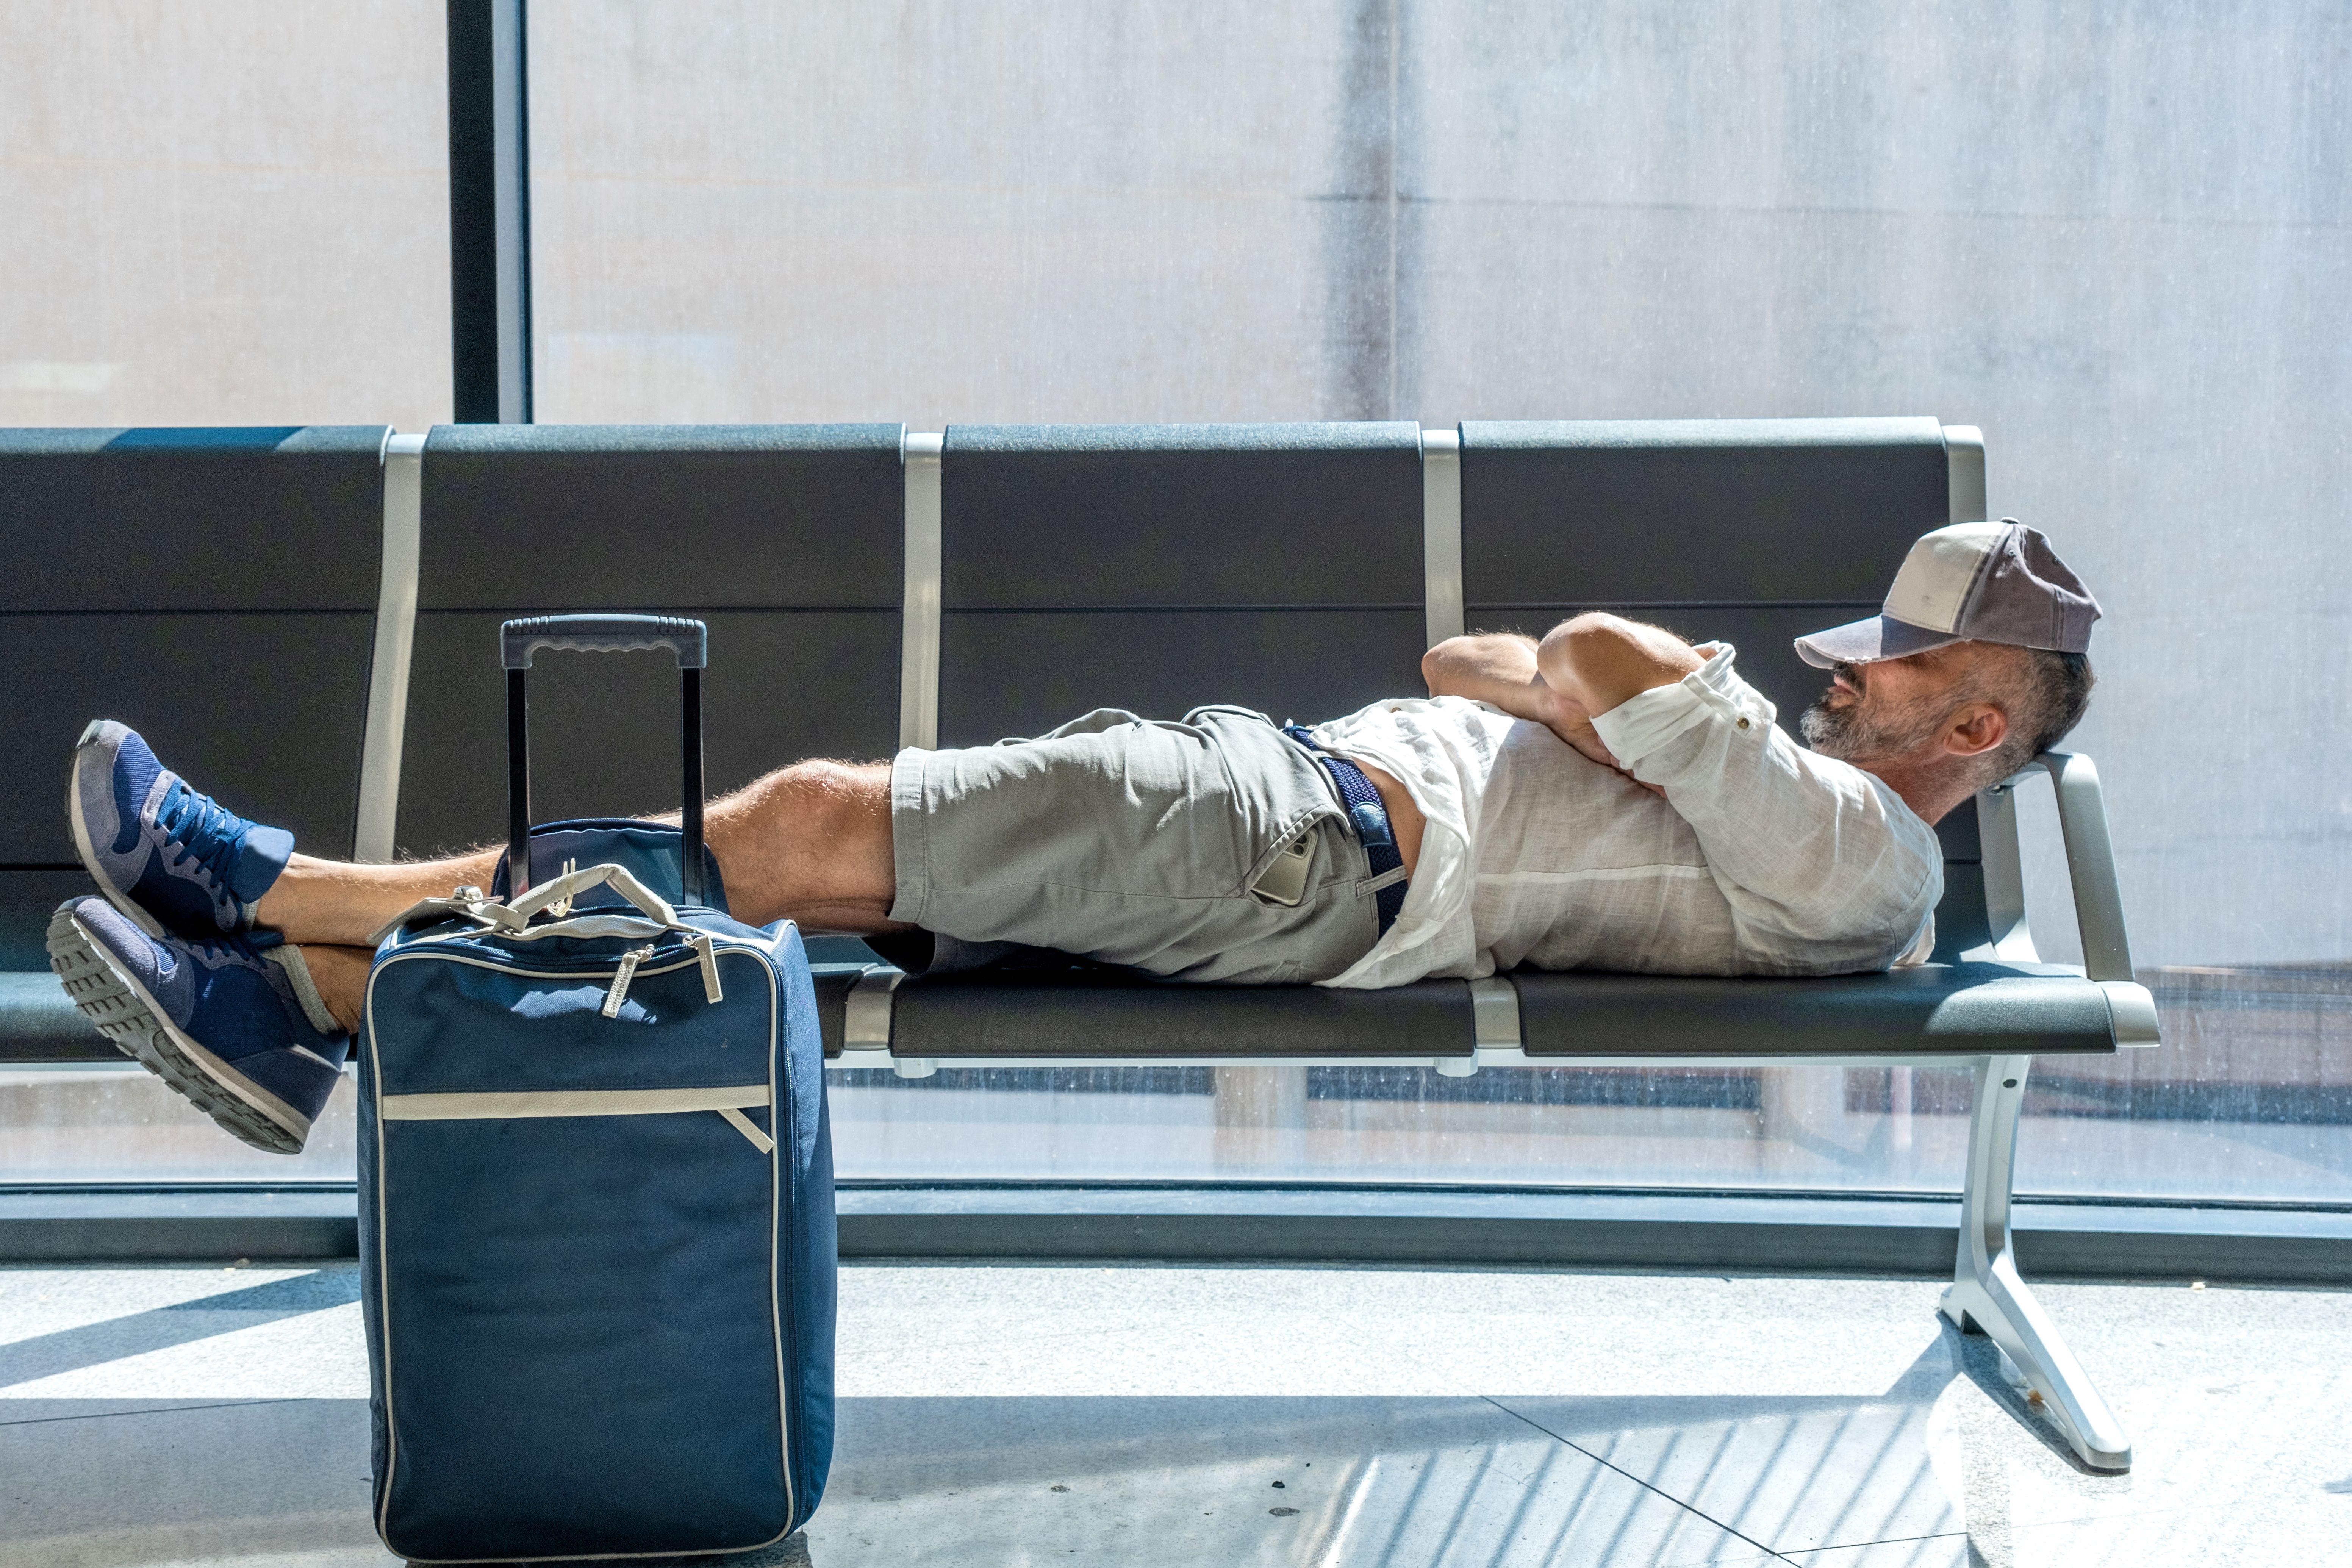 Man sleeping on airport gate seats.